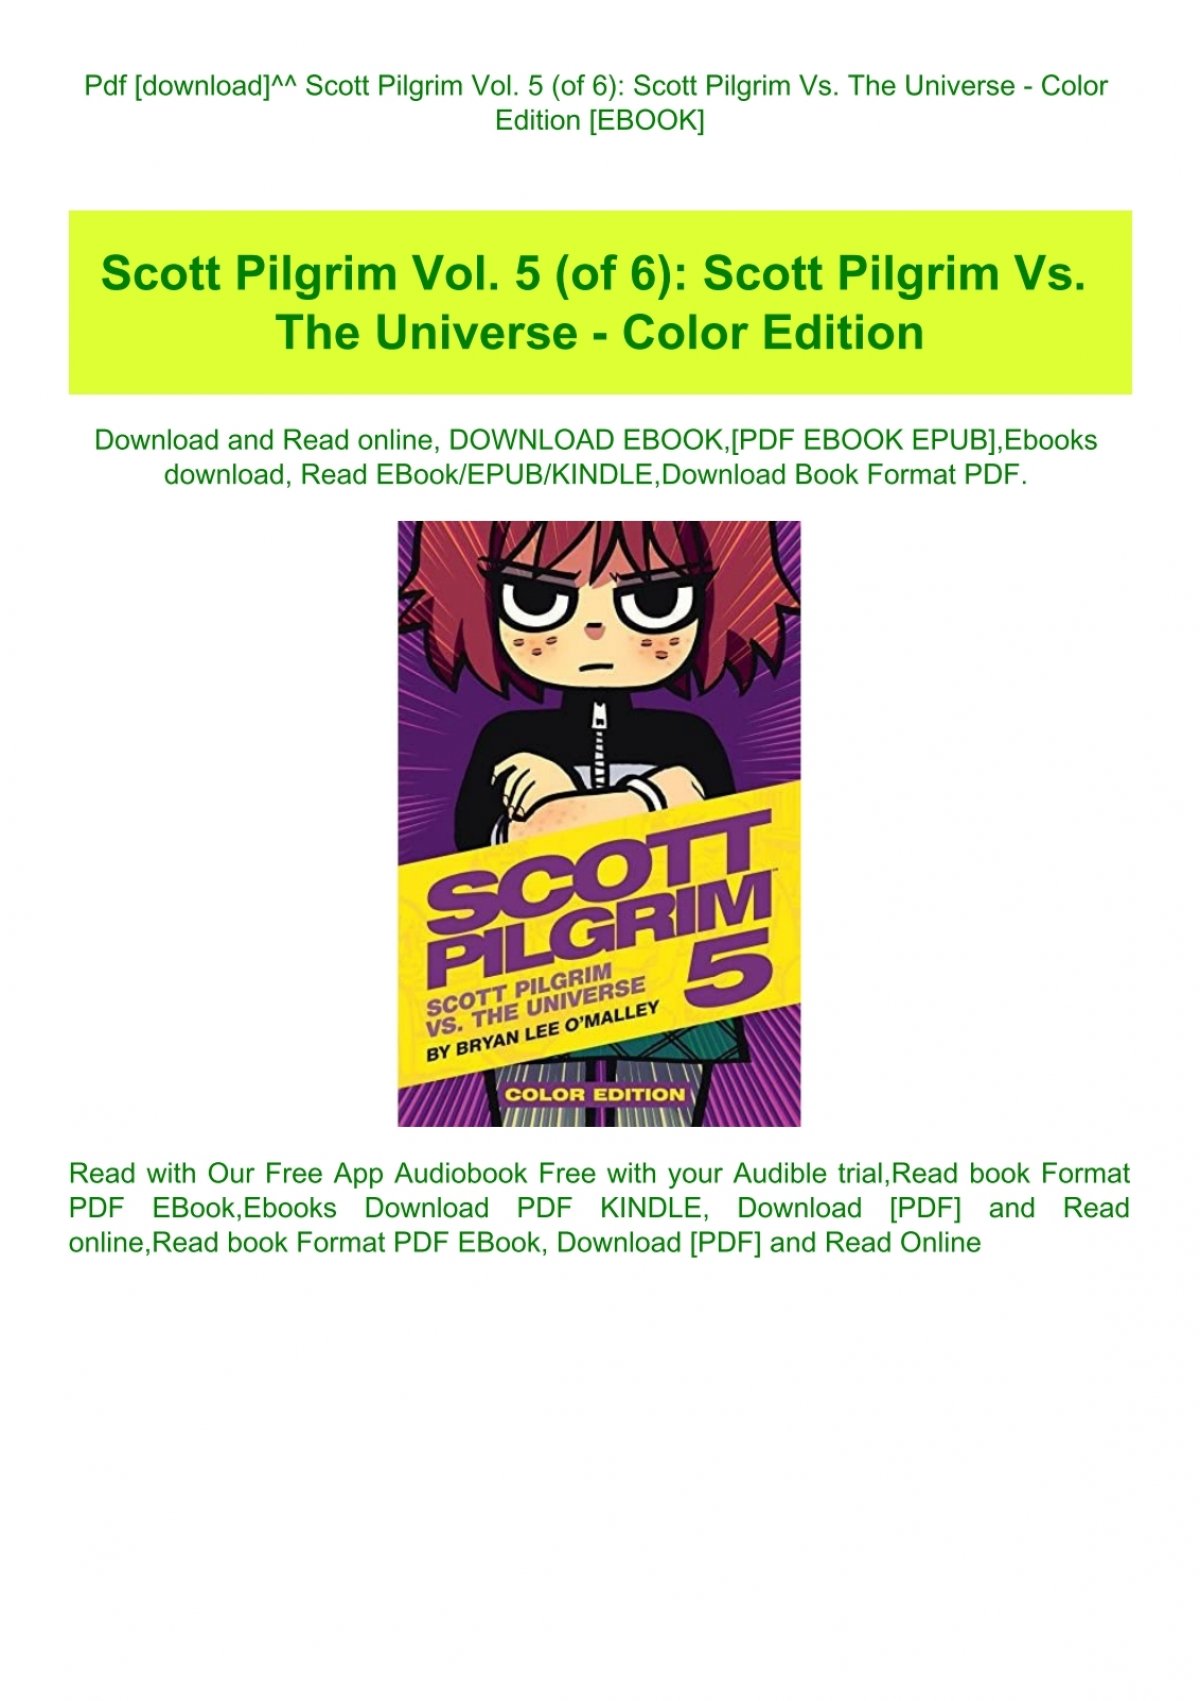 Pdf Download Scott Pilgrim Vol 5 Of 6 Scott Pilgrim Vs The